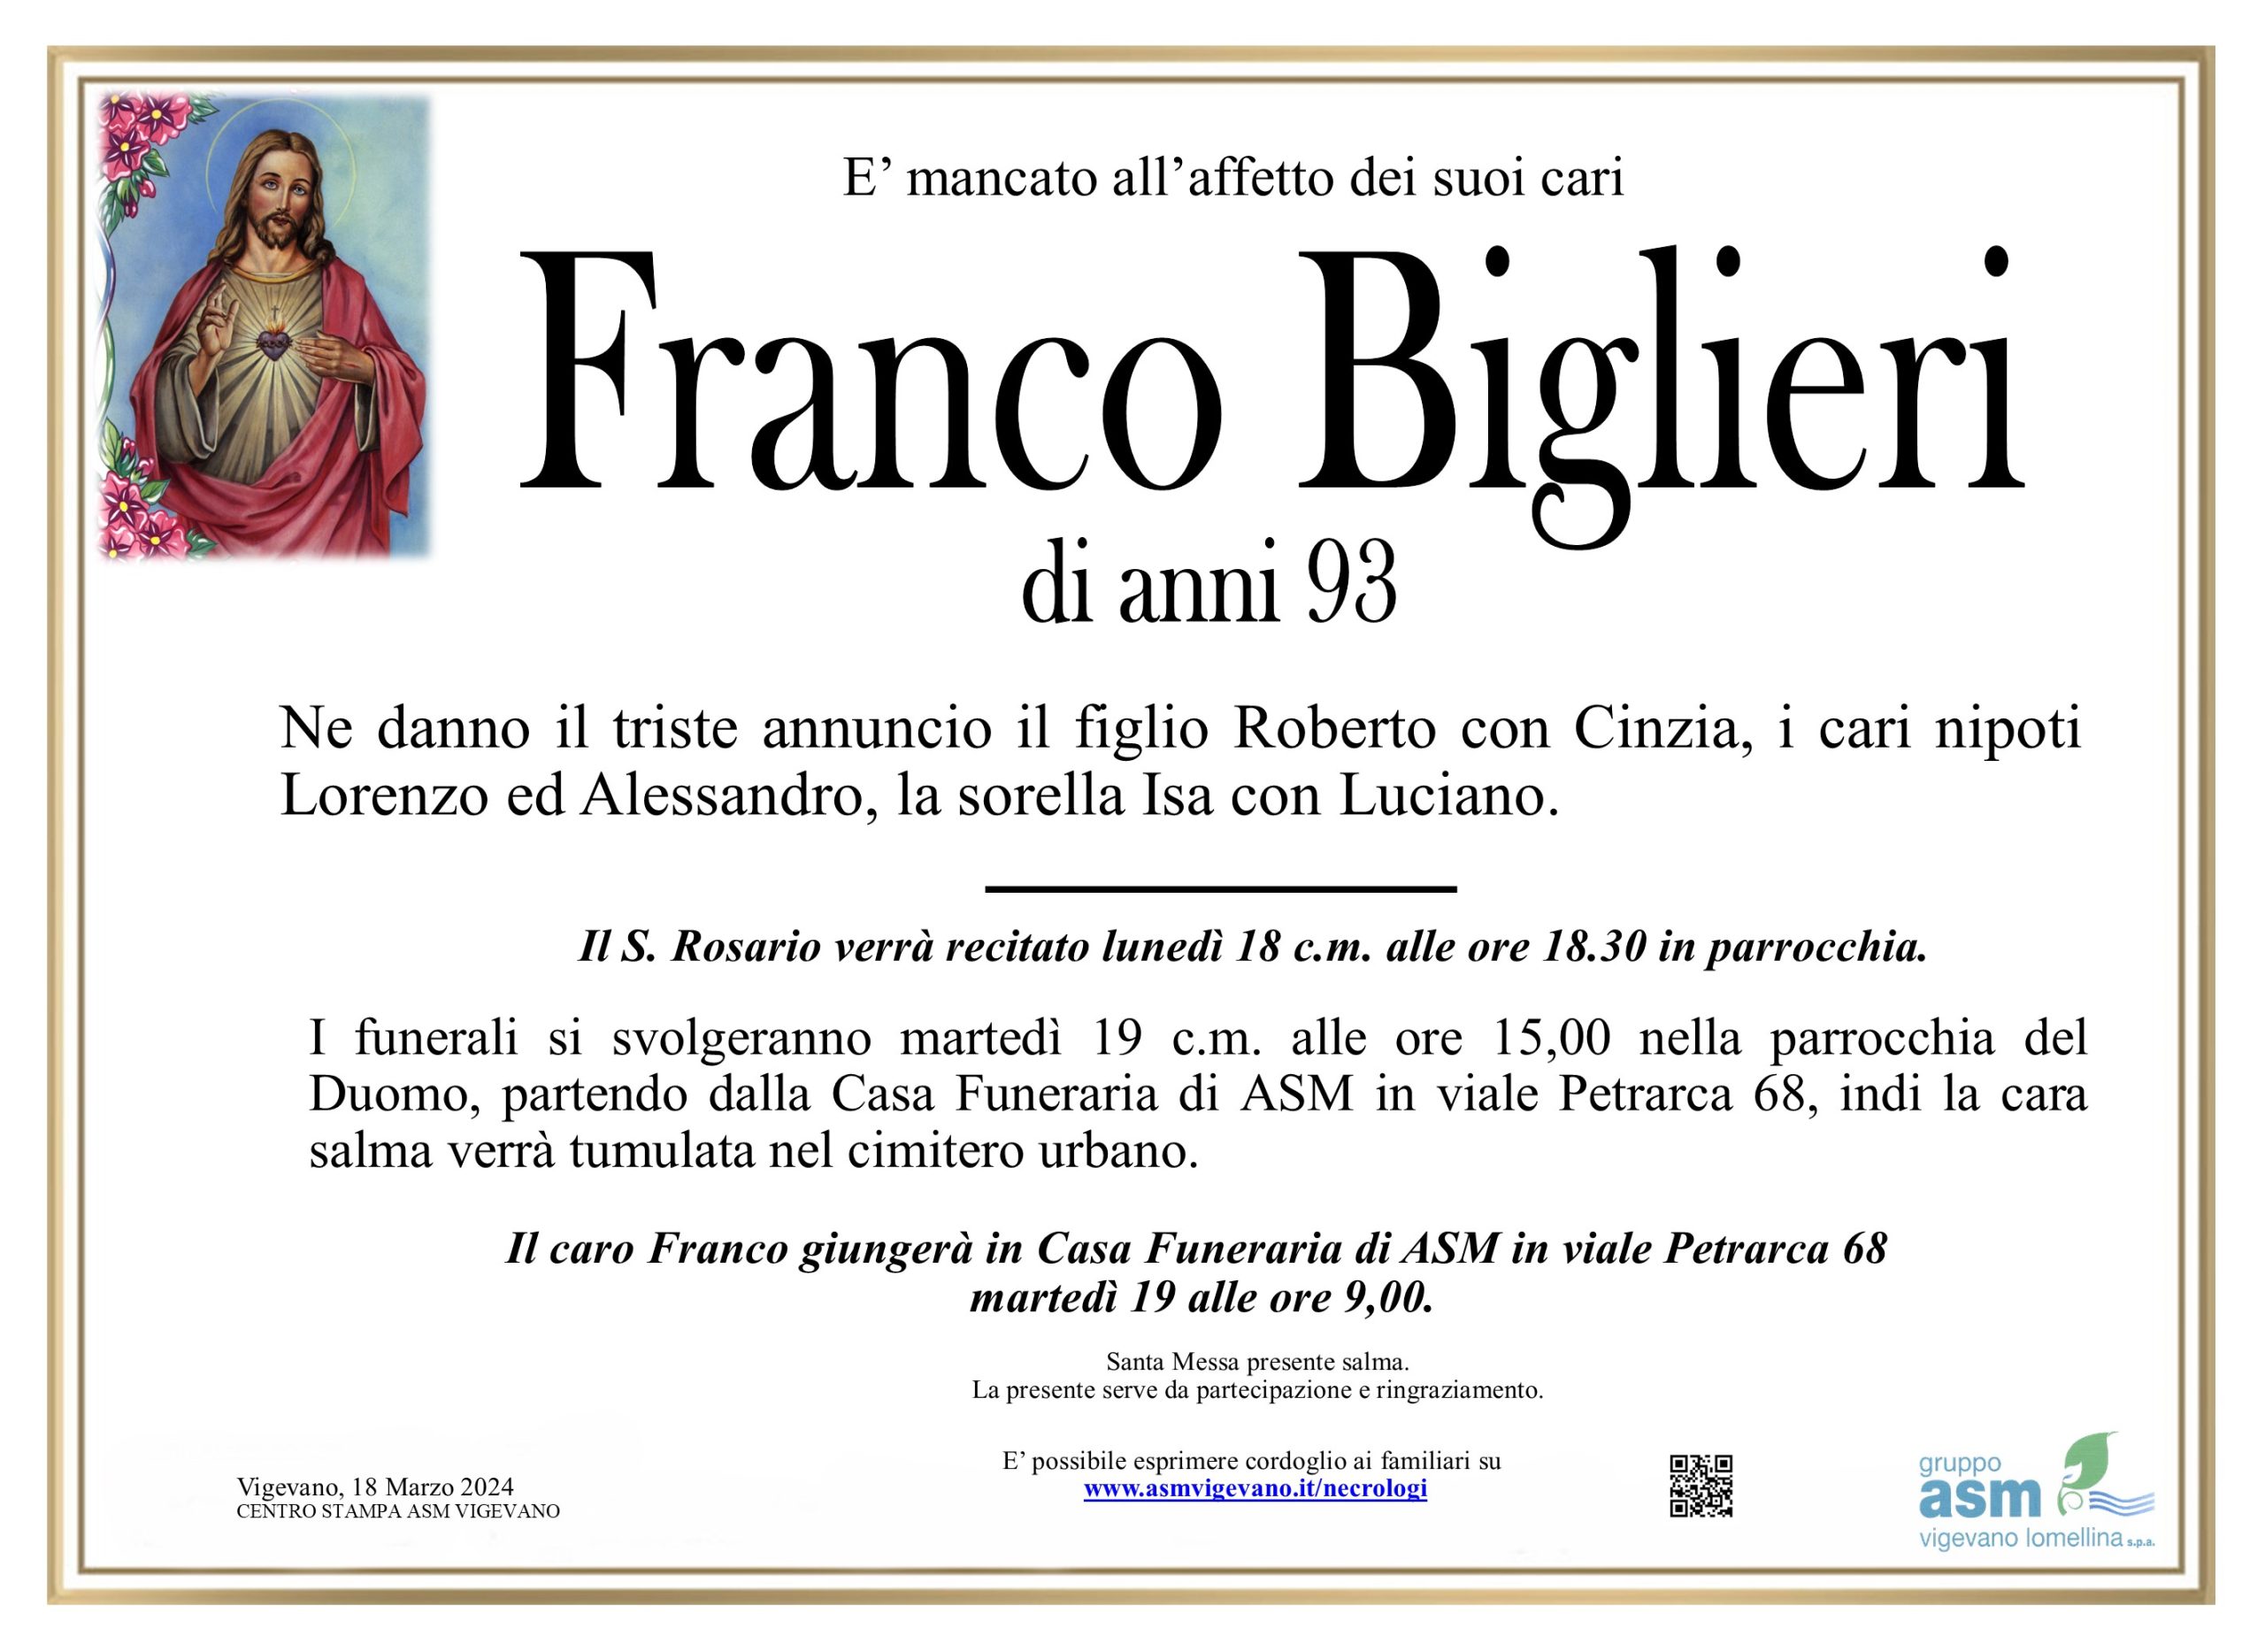 Franco Biglieri